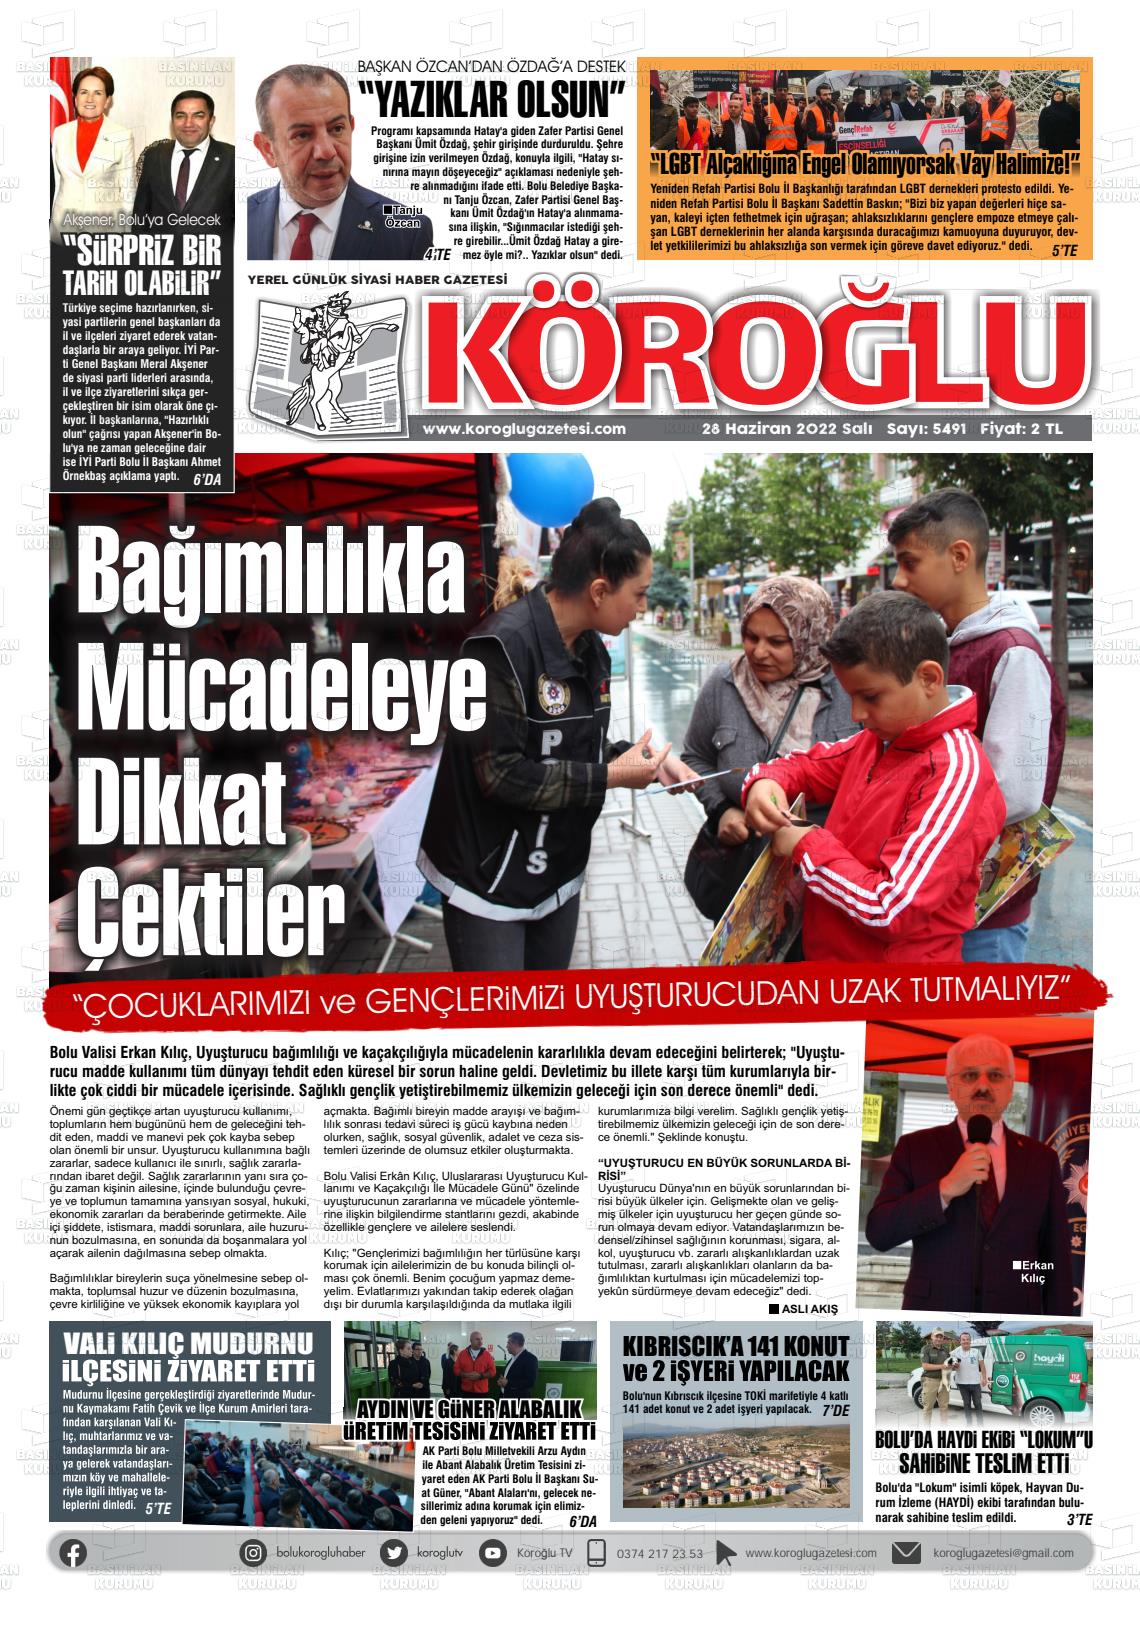 28 Haziran 2022 Köroğlu Gazete Manşeti